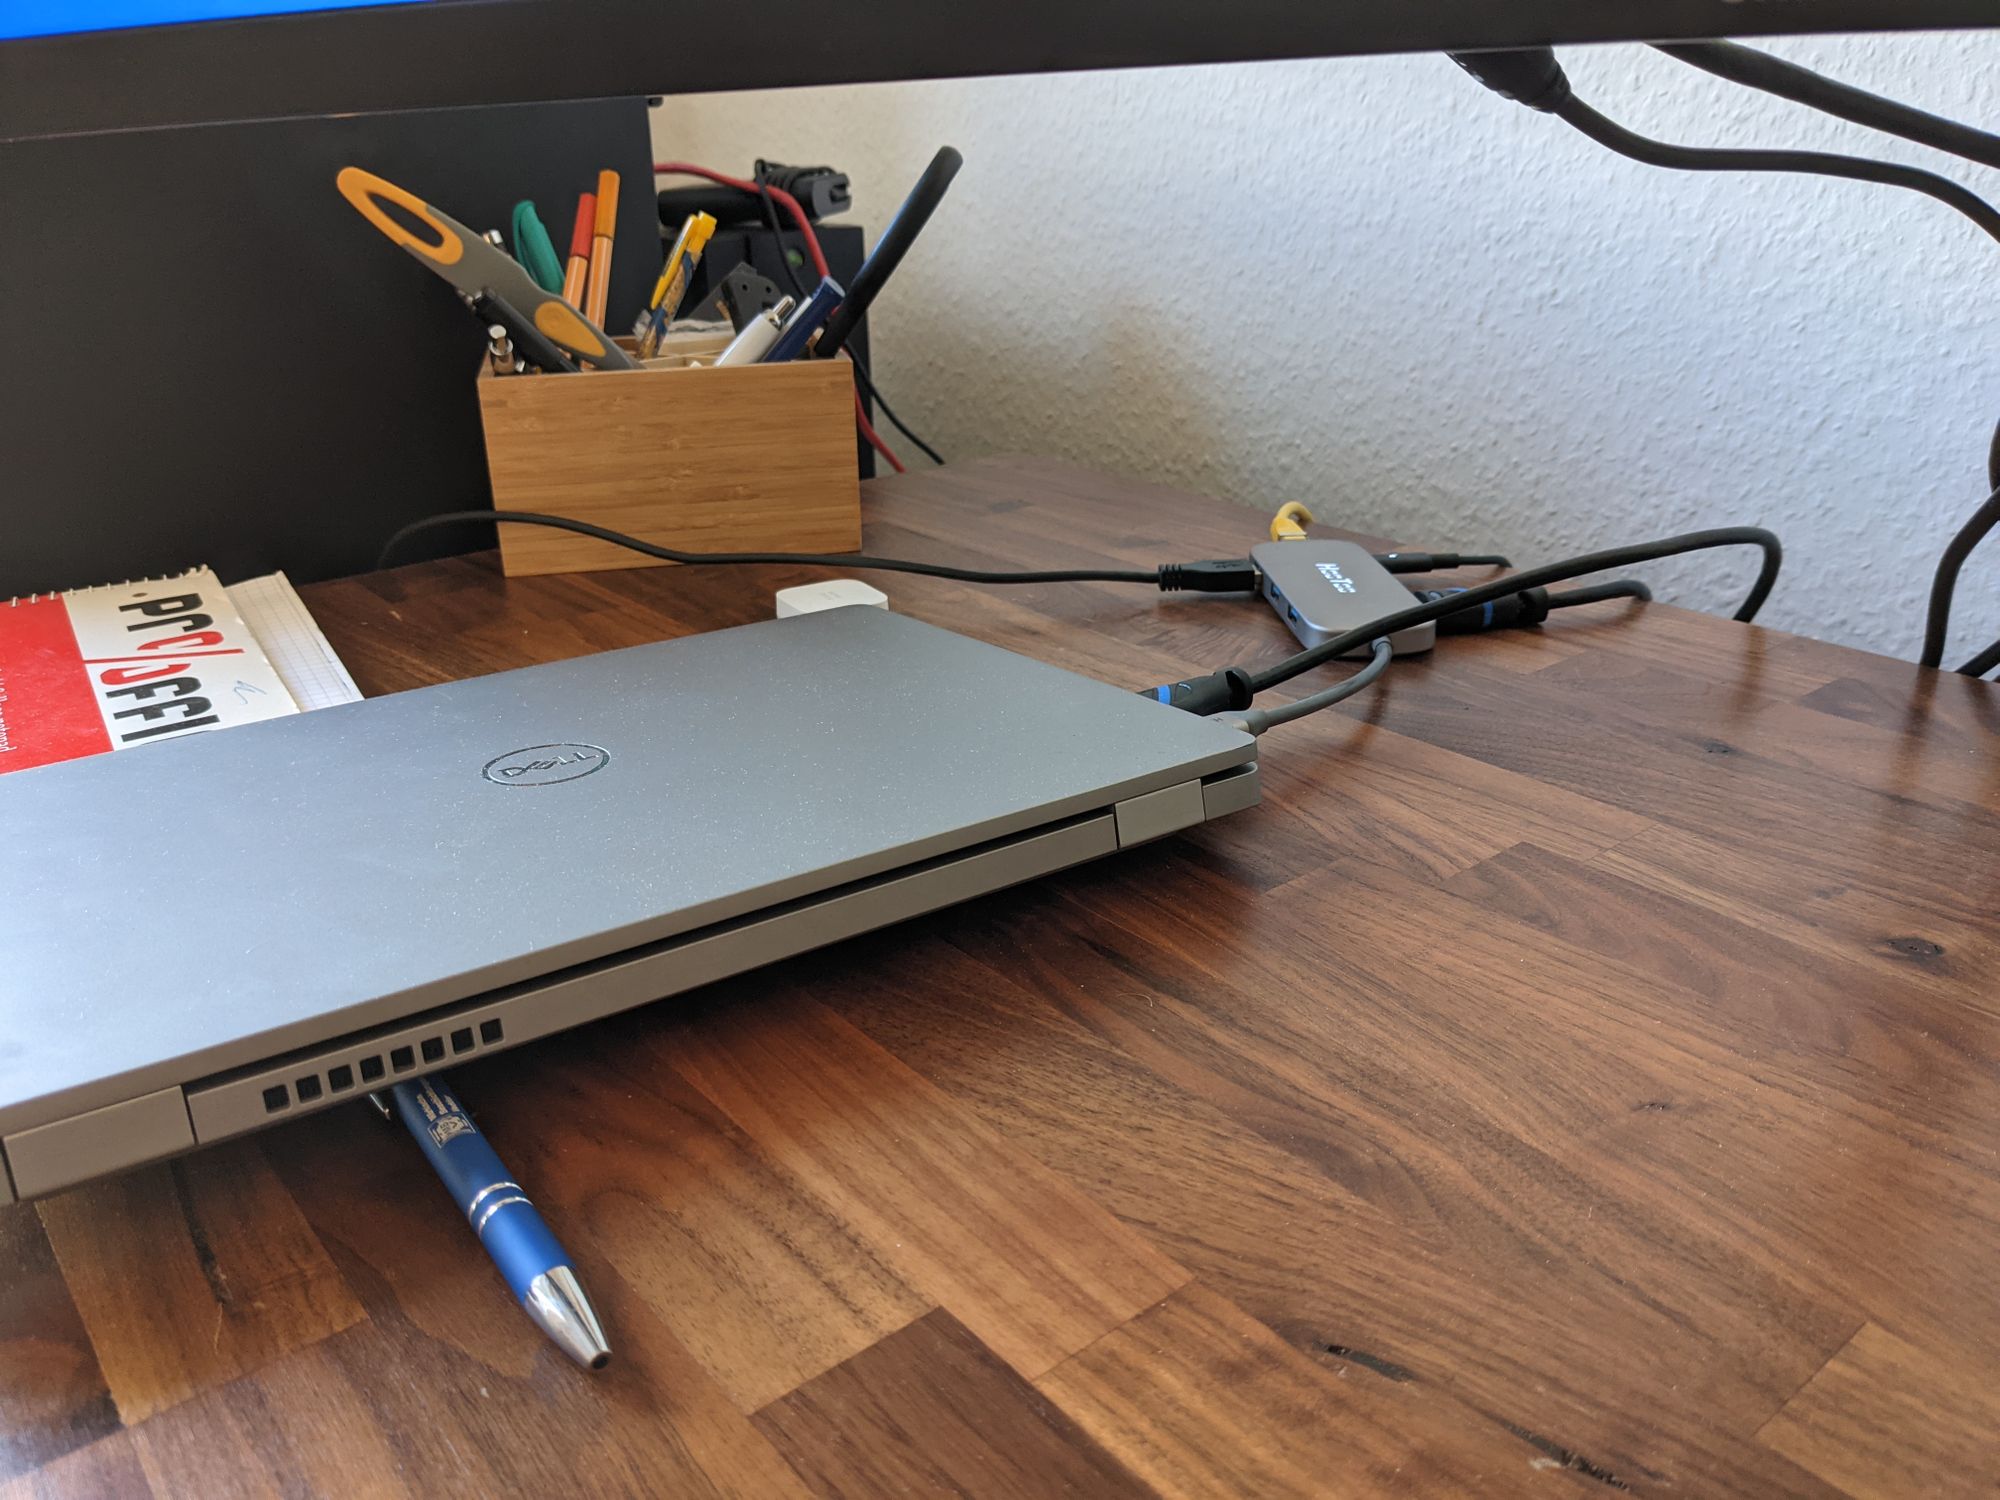 Pen holding up a laptop